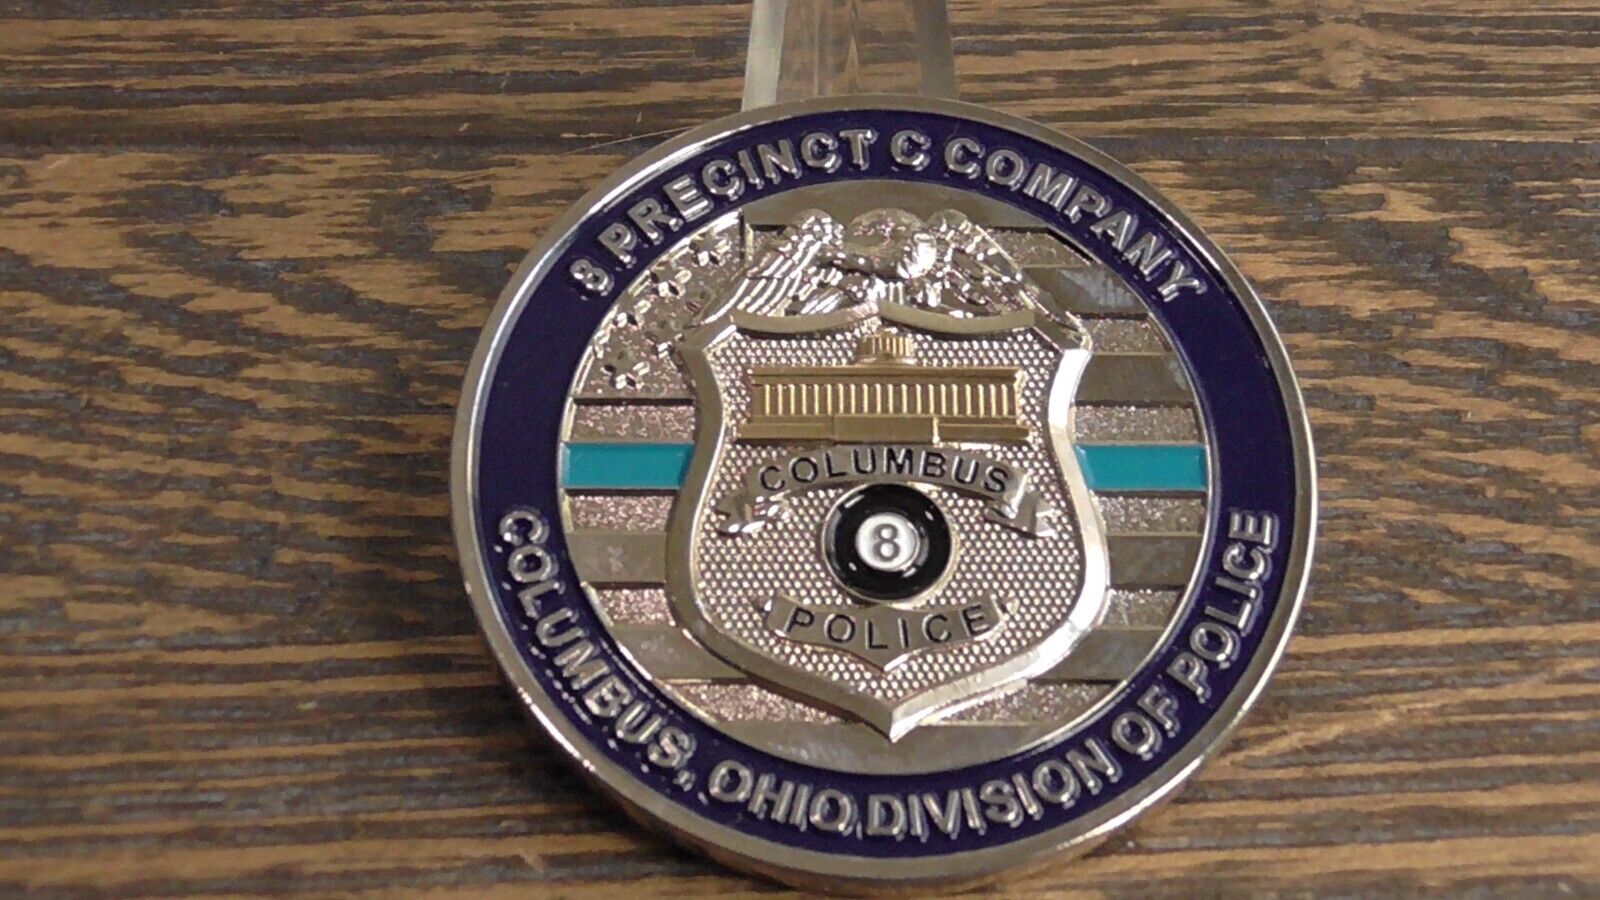 Columbus Ohio Police Department 8th Precinct C Companny Challenge Coin #108W